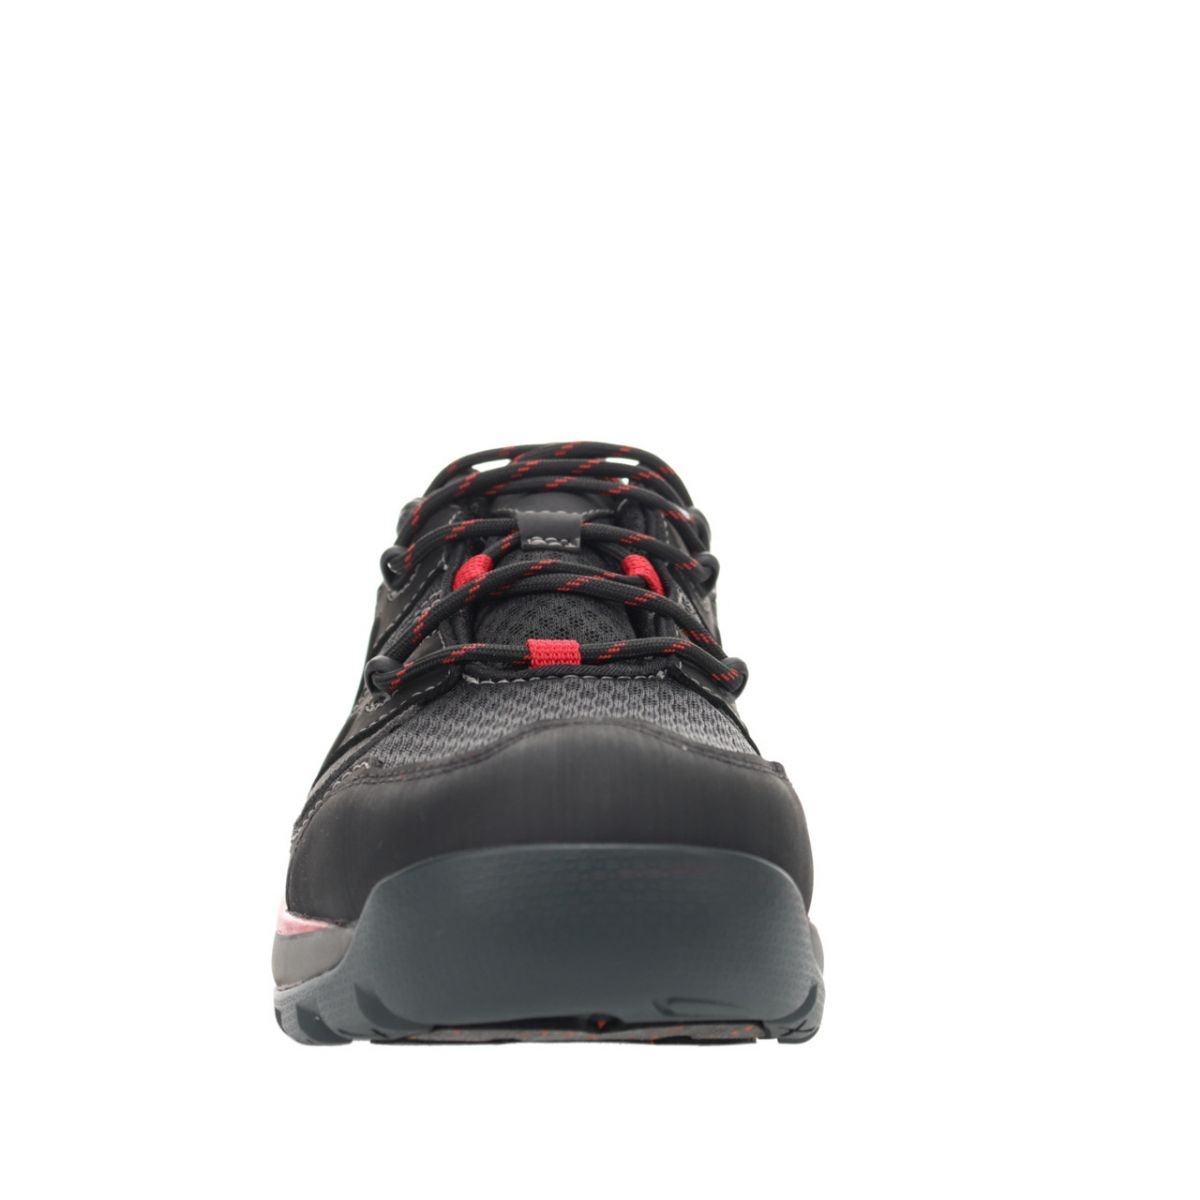 Propet Men's Vercors Hiking Shoe Black/Red - MOA002SBRD BLACK/RED - BLACK/RED, 14